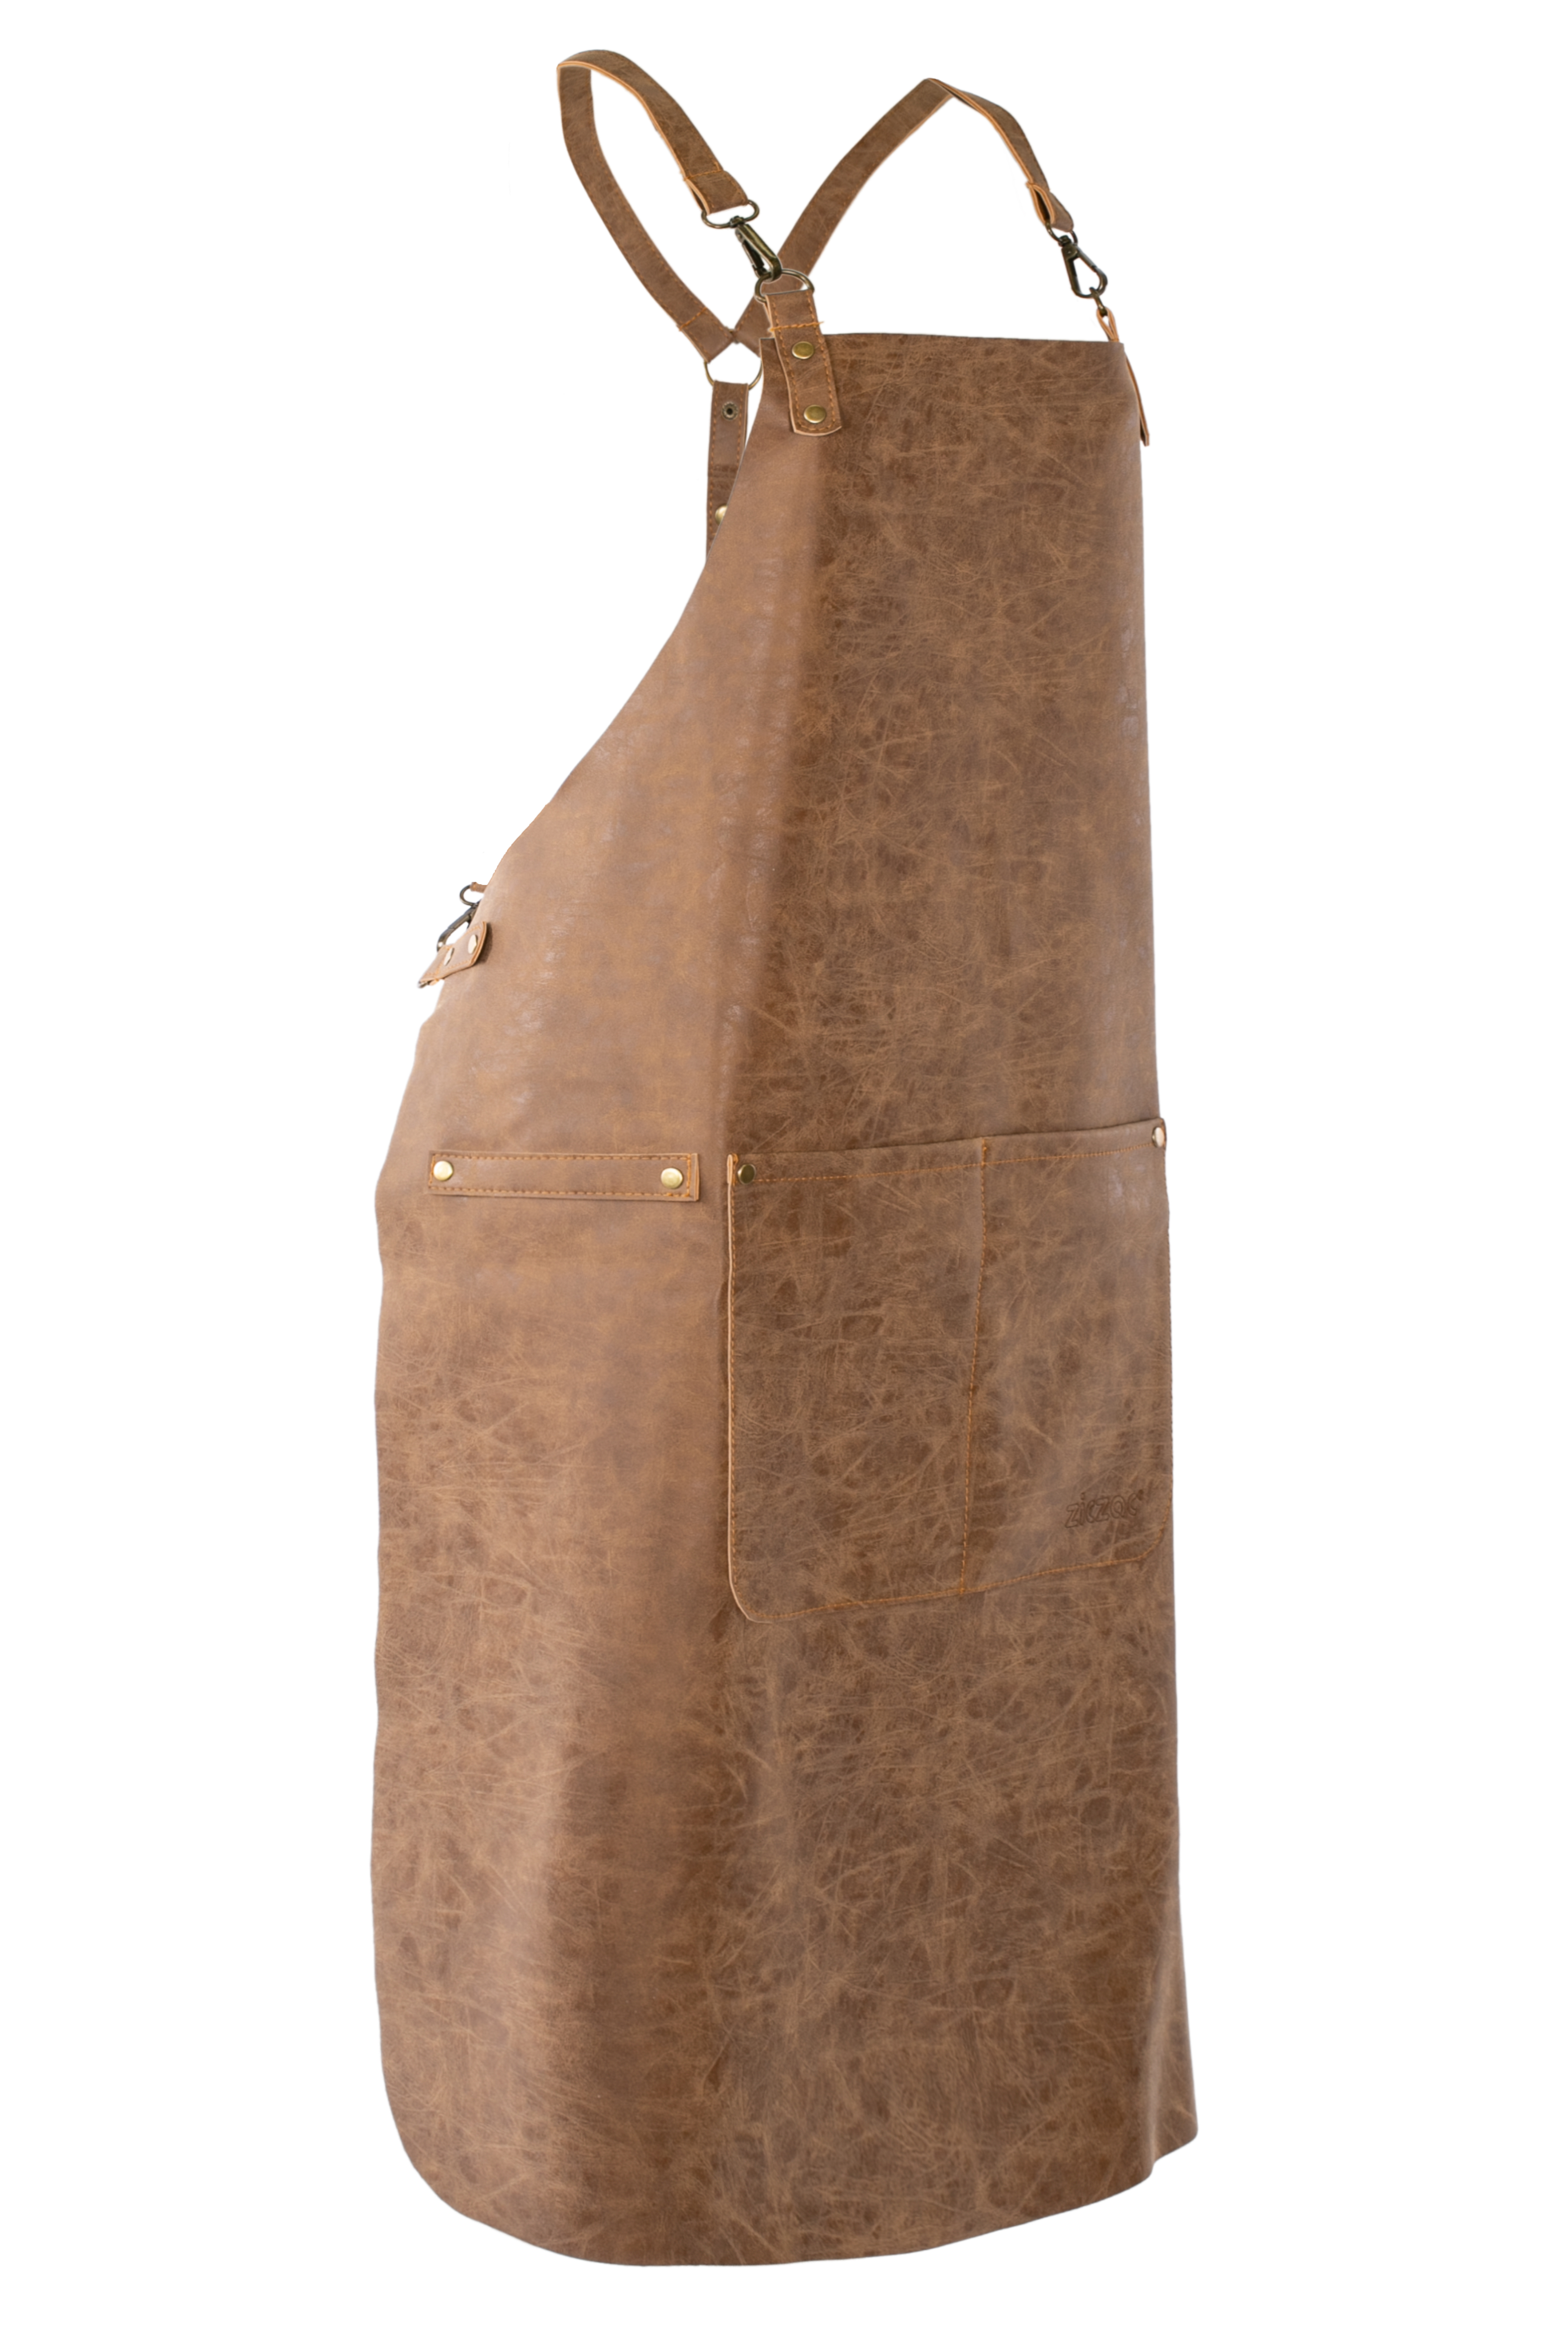 Schort TRUMAN (Sling Back Barber Style), 64x85 cm, walnut